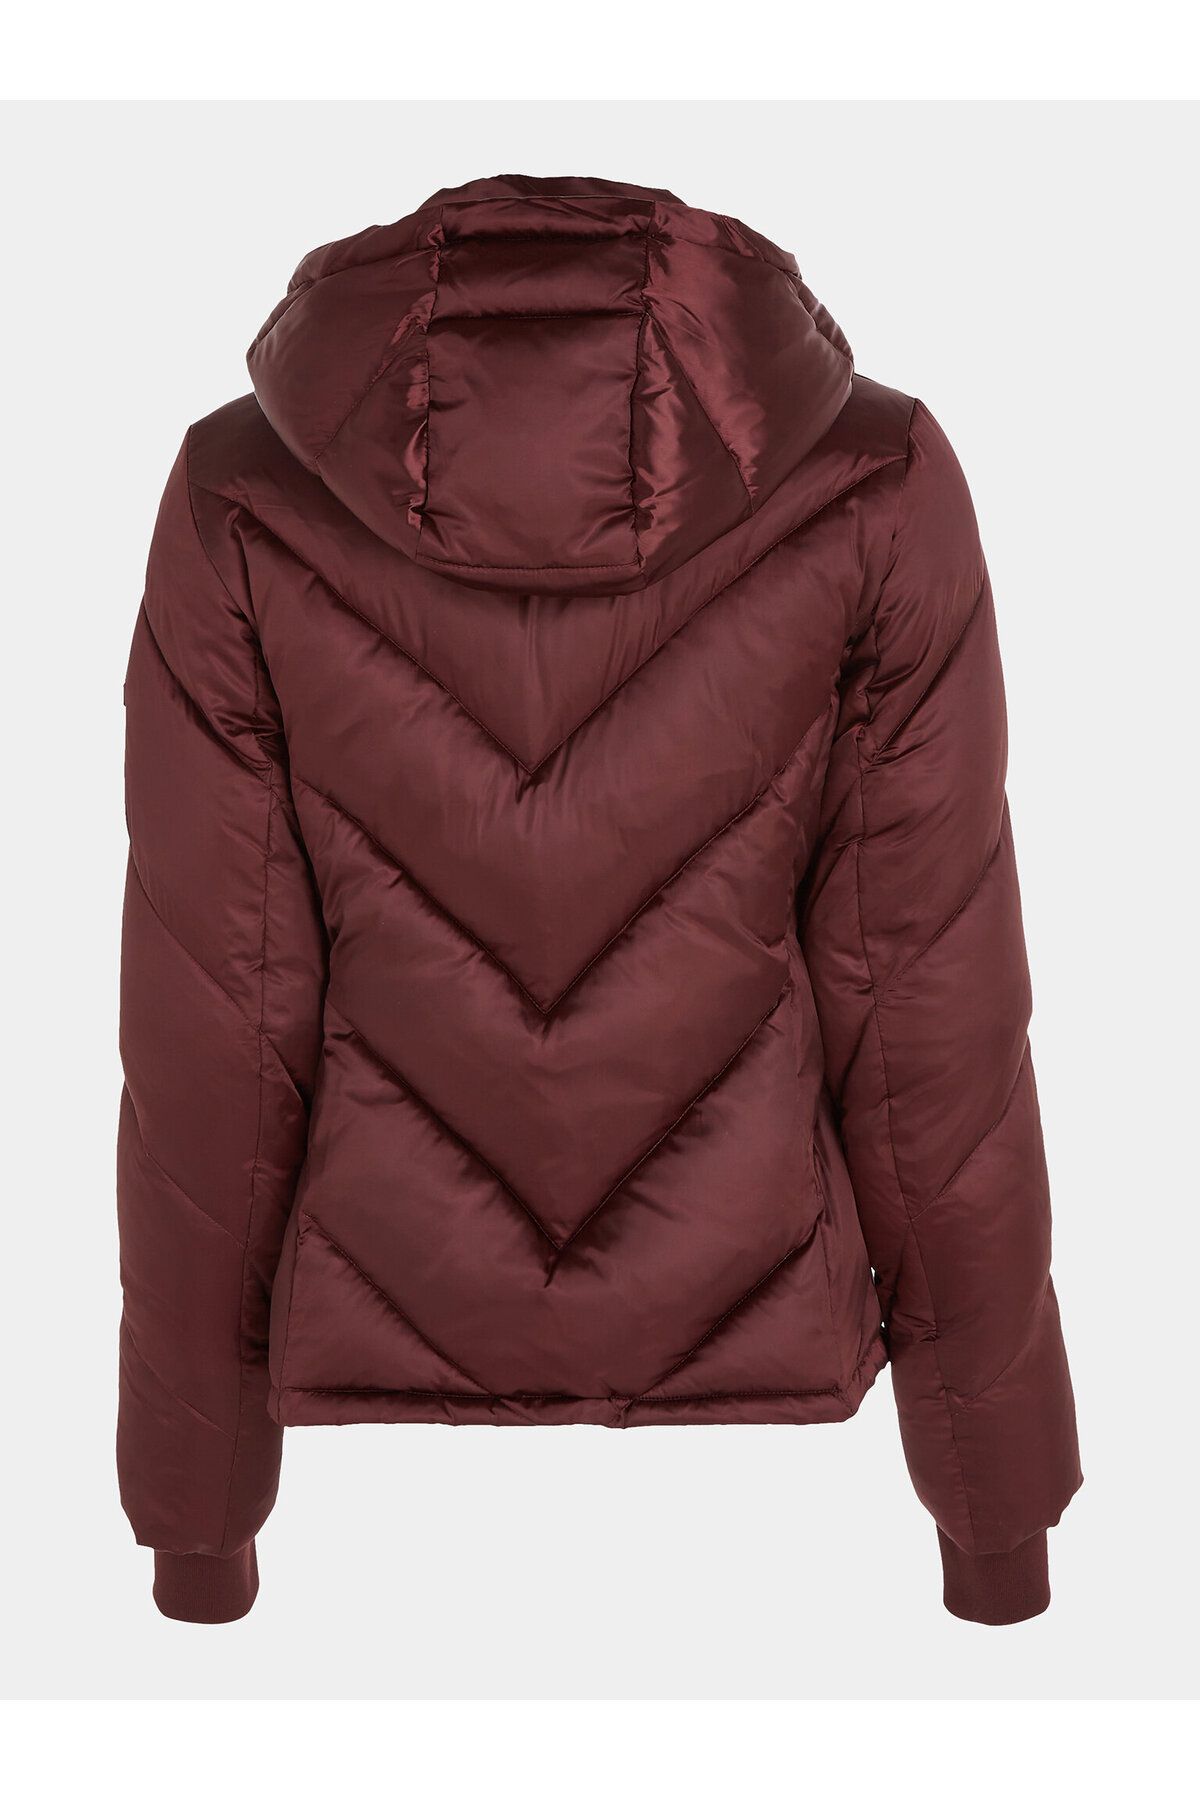 - Burgundy - Winter fit Klein Trendyol - Calvin Relaxed Jacket